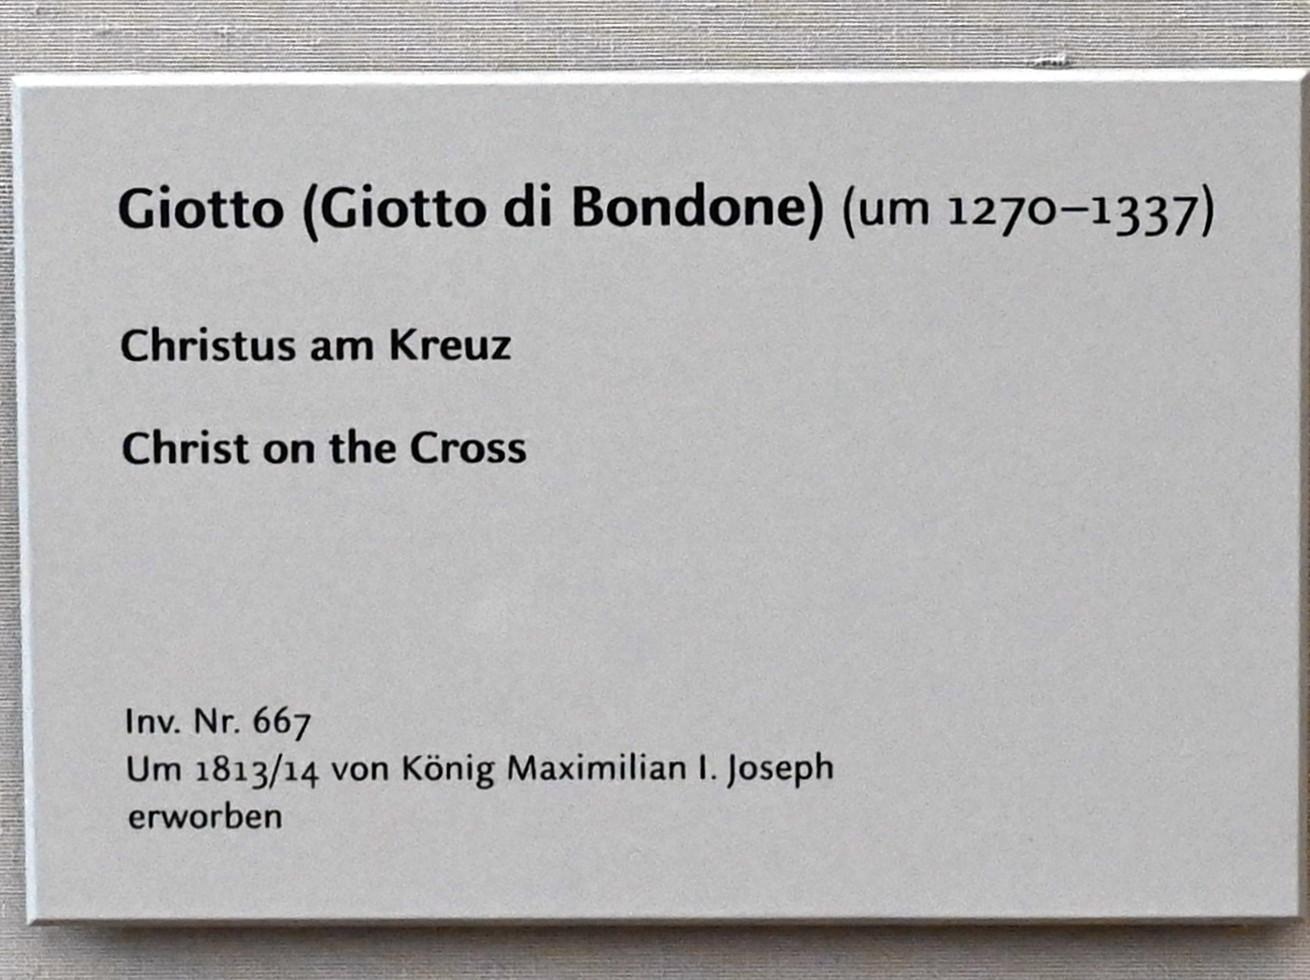 Giotto di Bondone (Giotto) (1298–1330), Christus am Kreuz, München, Alte Pinakothek, Obergeschoss Kabinett 1, um 1303–1313, Bild 2/3